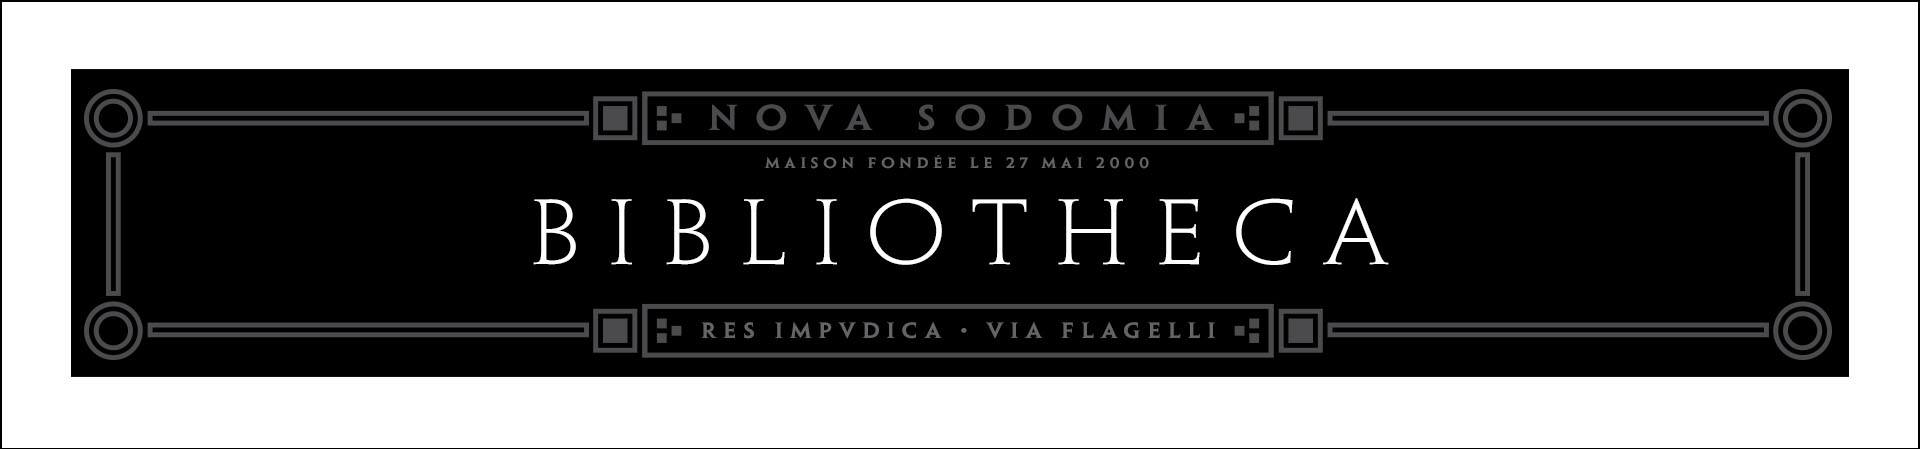 Nova Sodomia - Bibliotheca